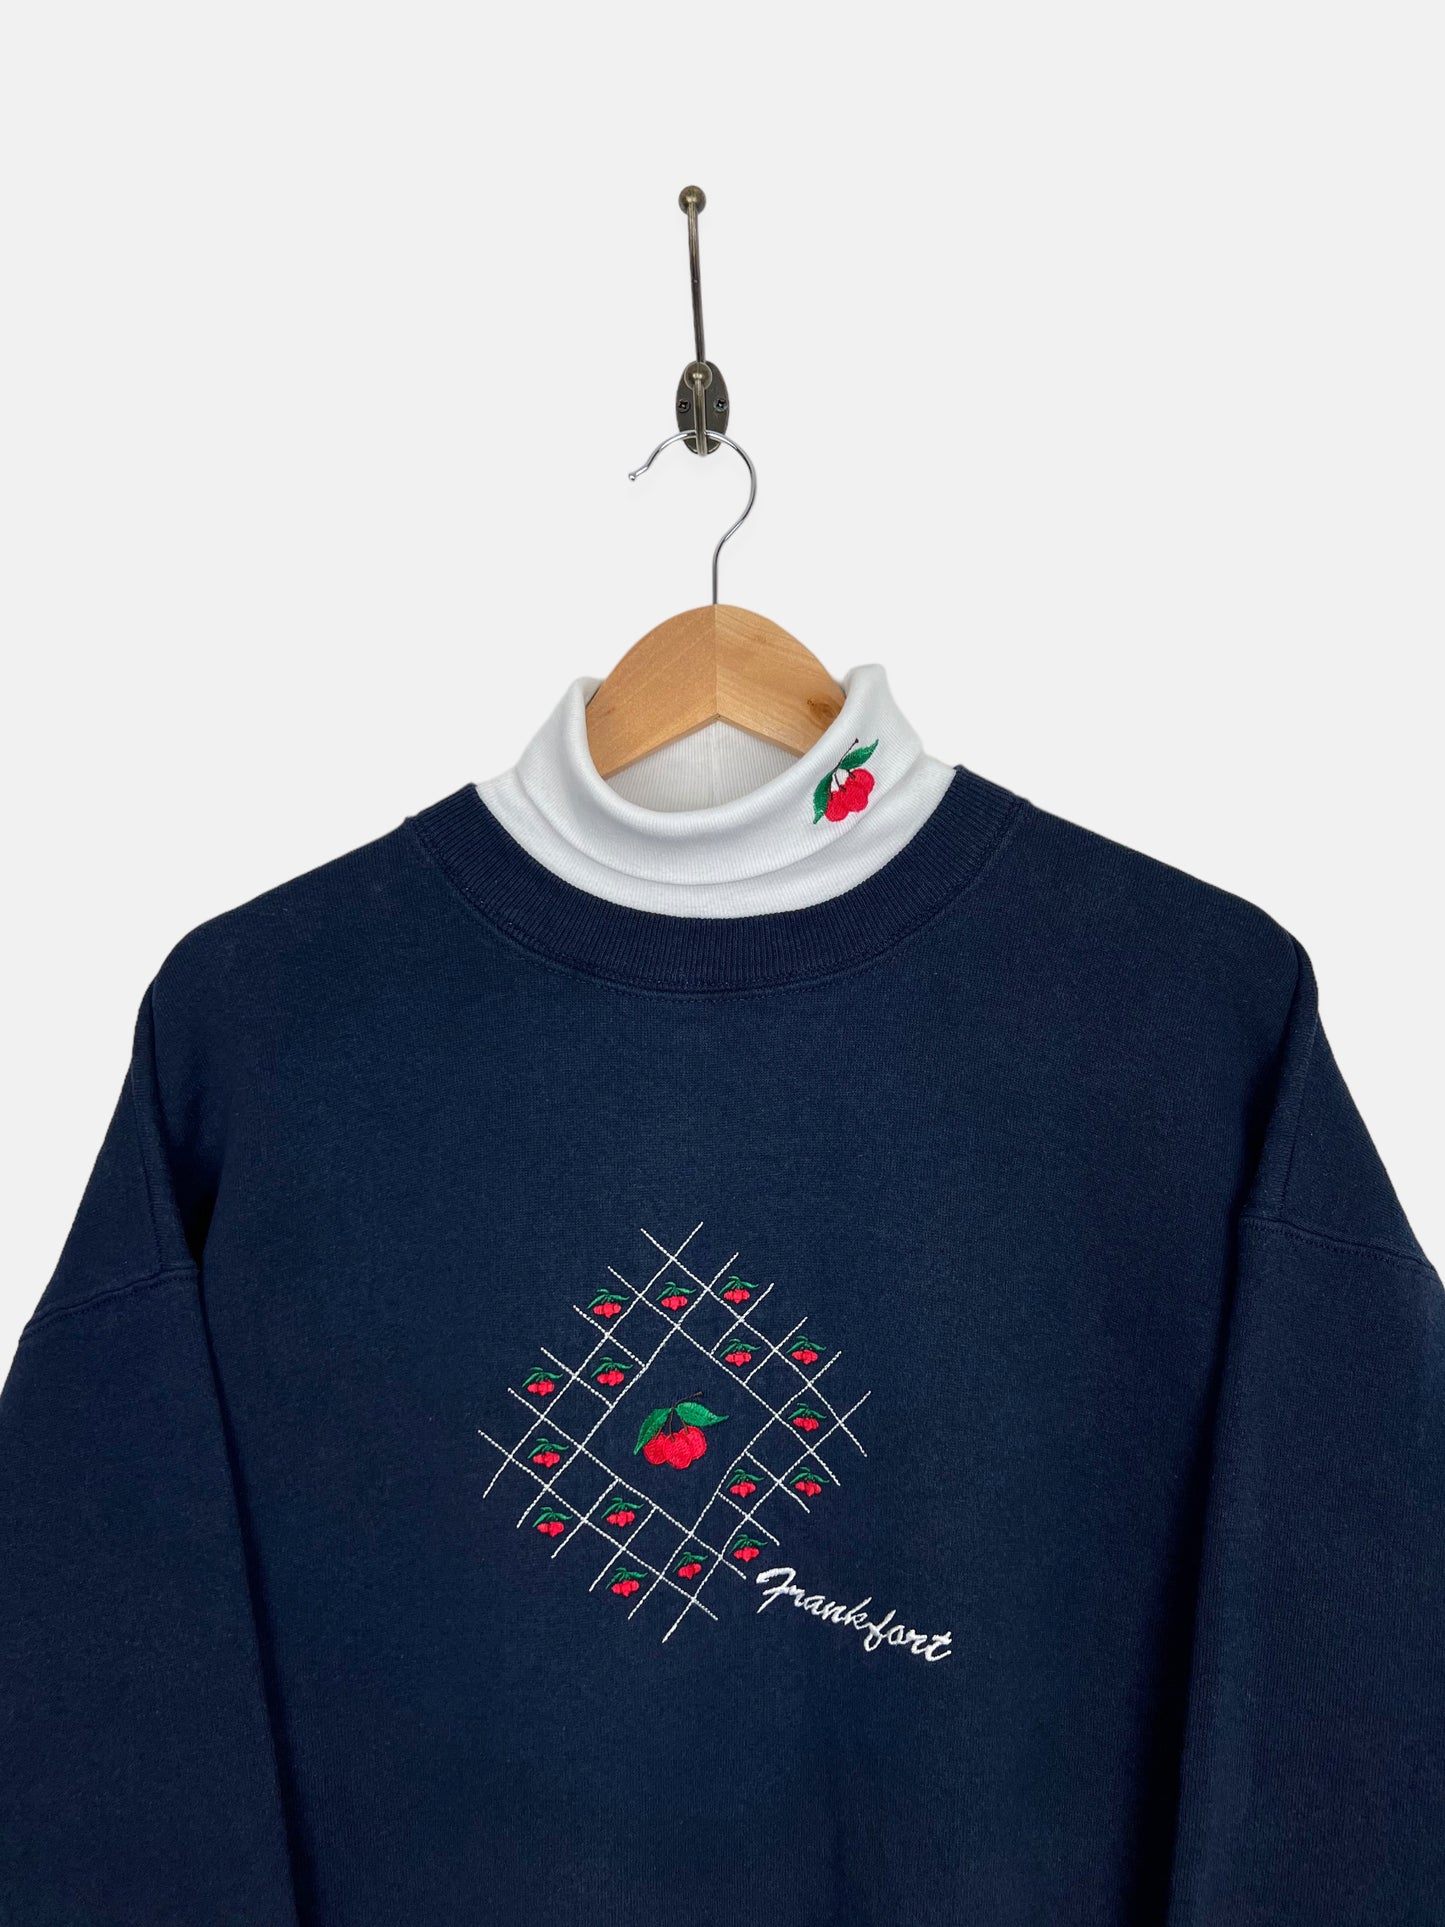 90's Frankfurt USA Made Embroidered Vintage Mock-Neck Sweatshirt Size L-XL